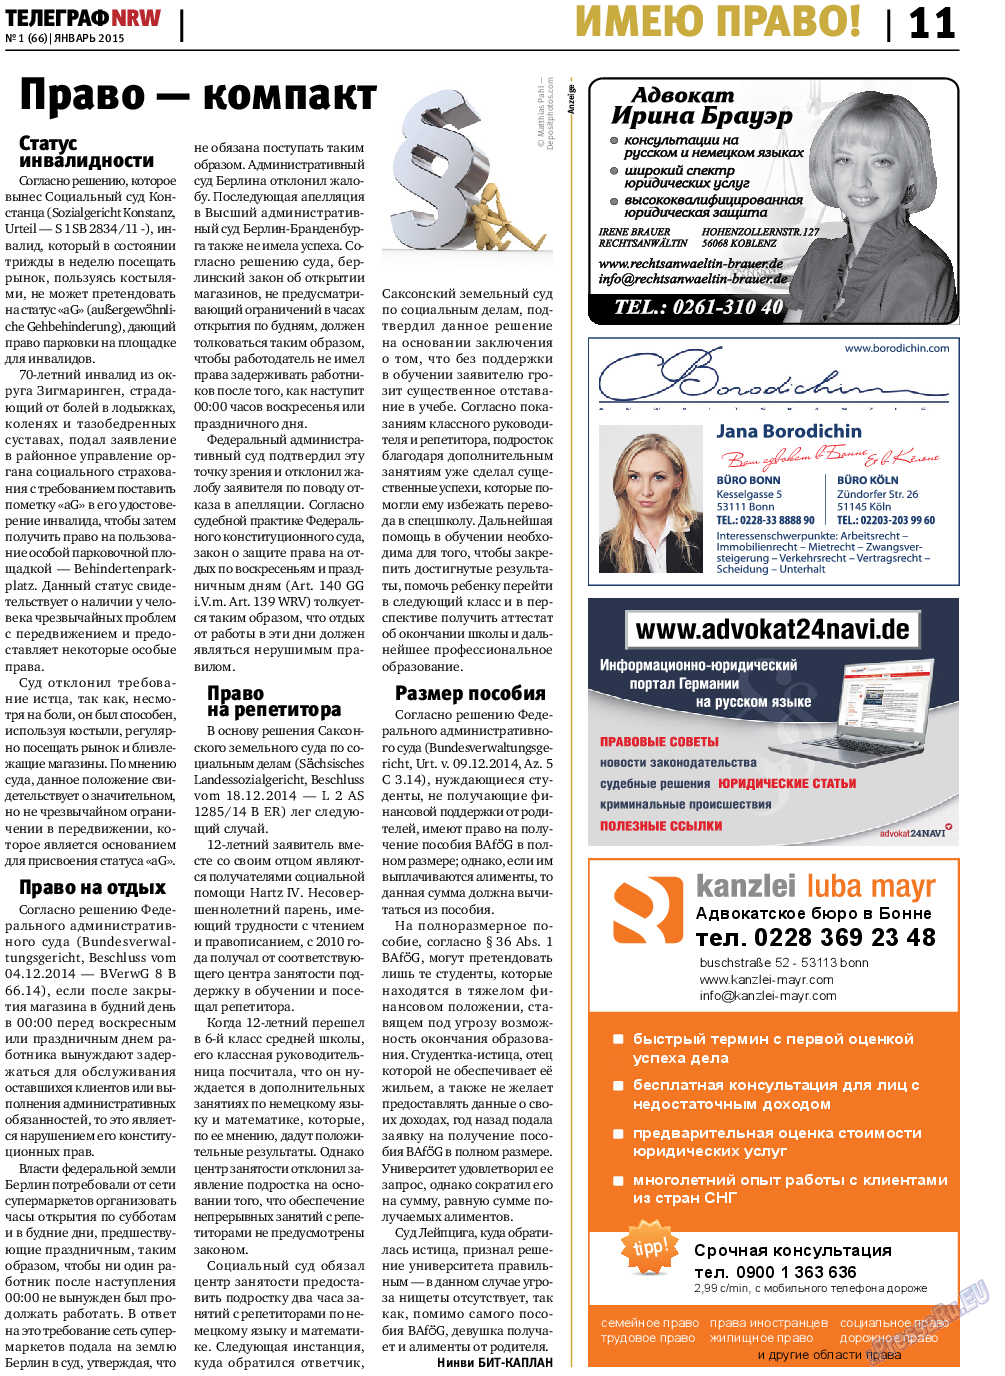 Телеграф NRW, газета. 2015 №1 стр.11